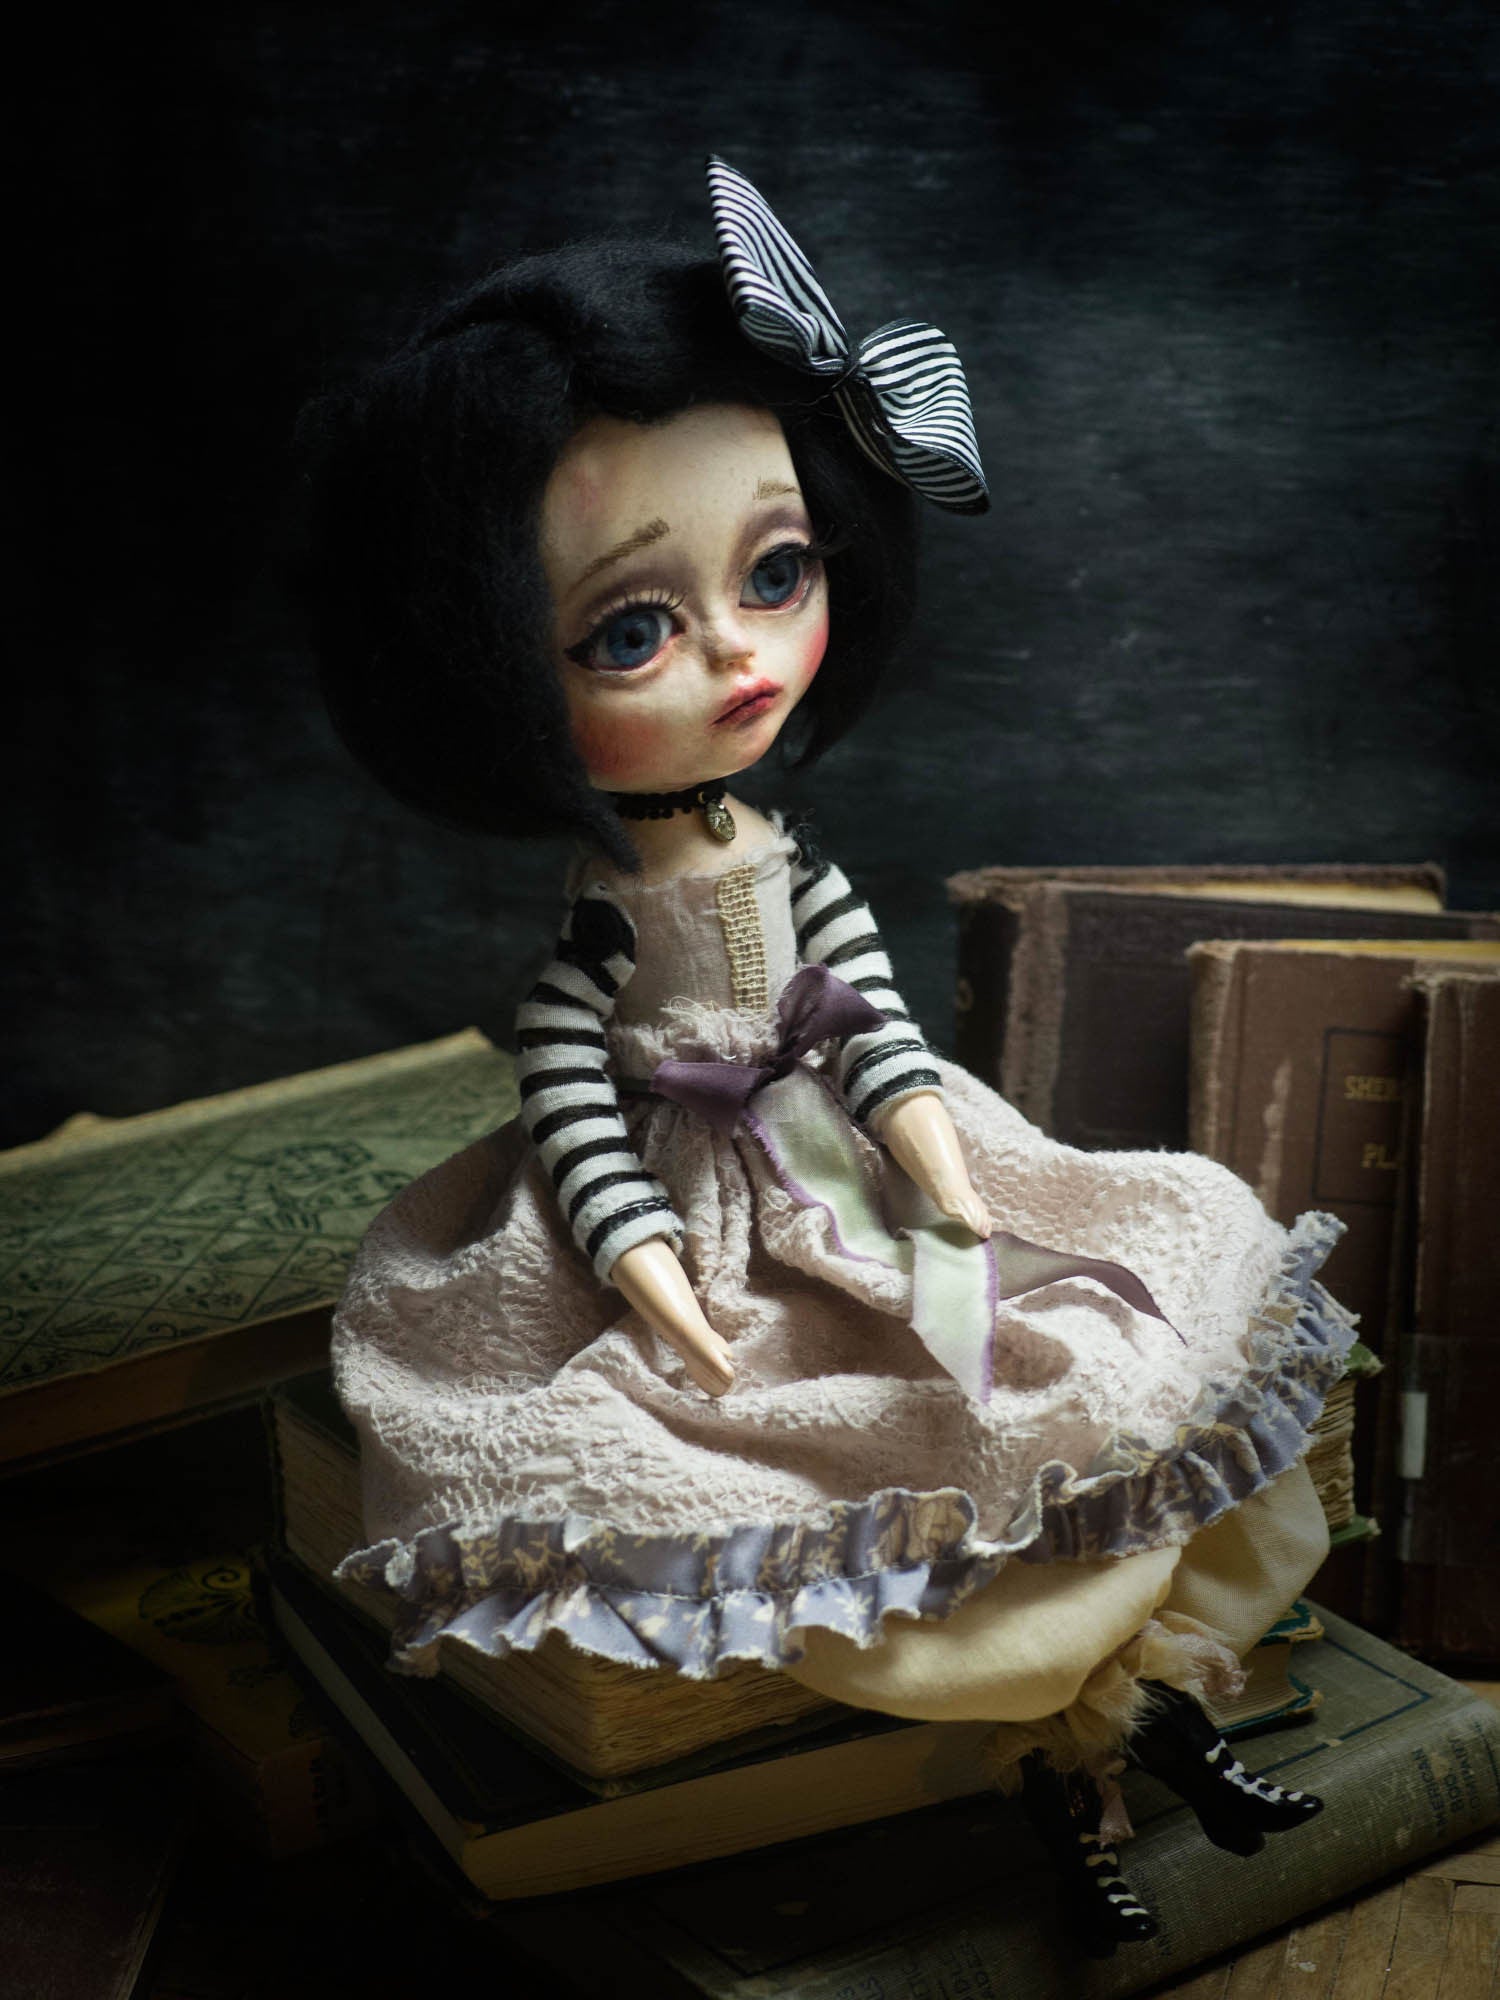 Danita beautiful handmade art doll vintage style girl with big blue glass eyes.